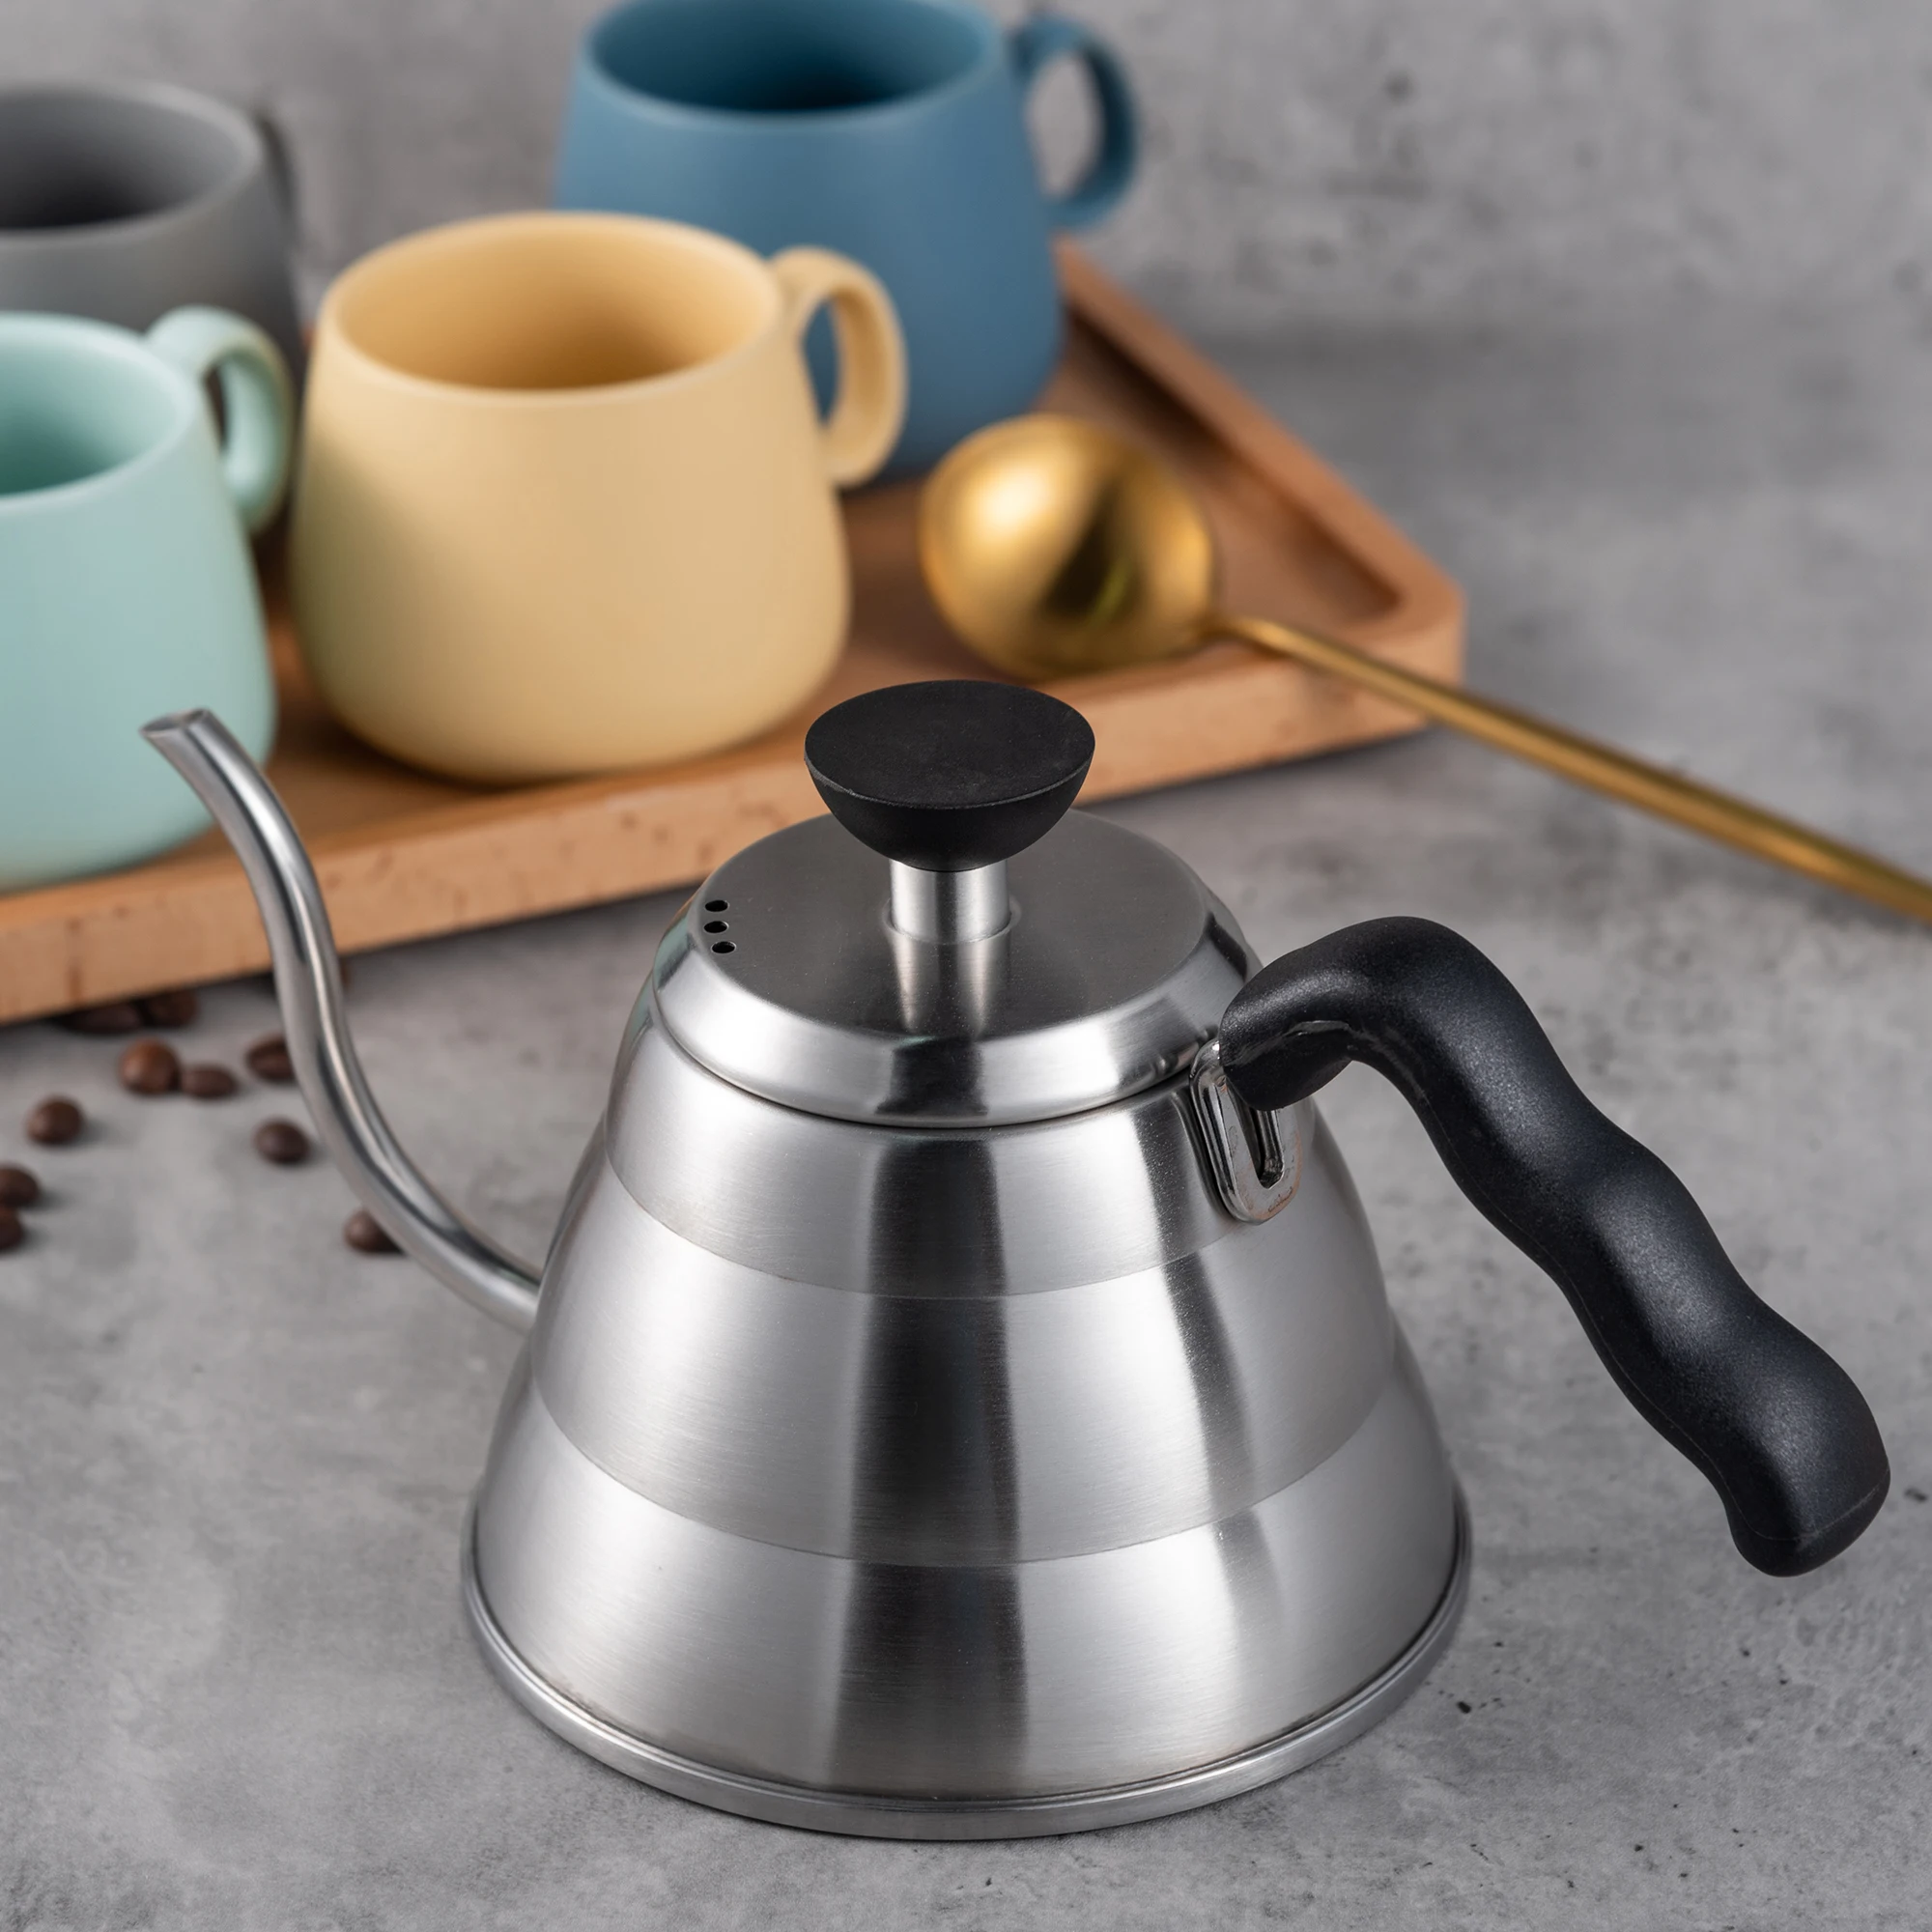 https://ae01.alicdn.com/kf/H2f689390235c42019384f1369e7bfa4dI/1L-1-2L-Stainless-Steel-Drip-Coffee-Kettle-Tea-Pot-Non-stick-Coating-Gooseneck-Pour-Over.jpg